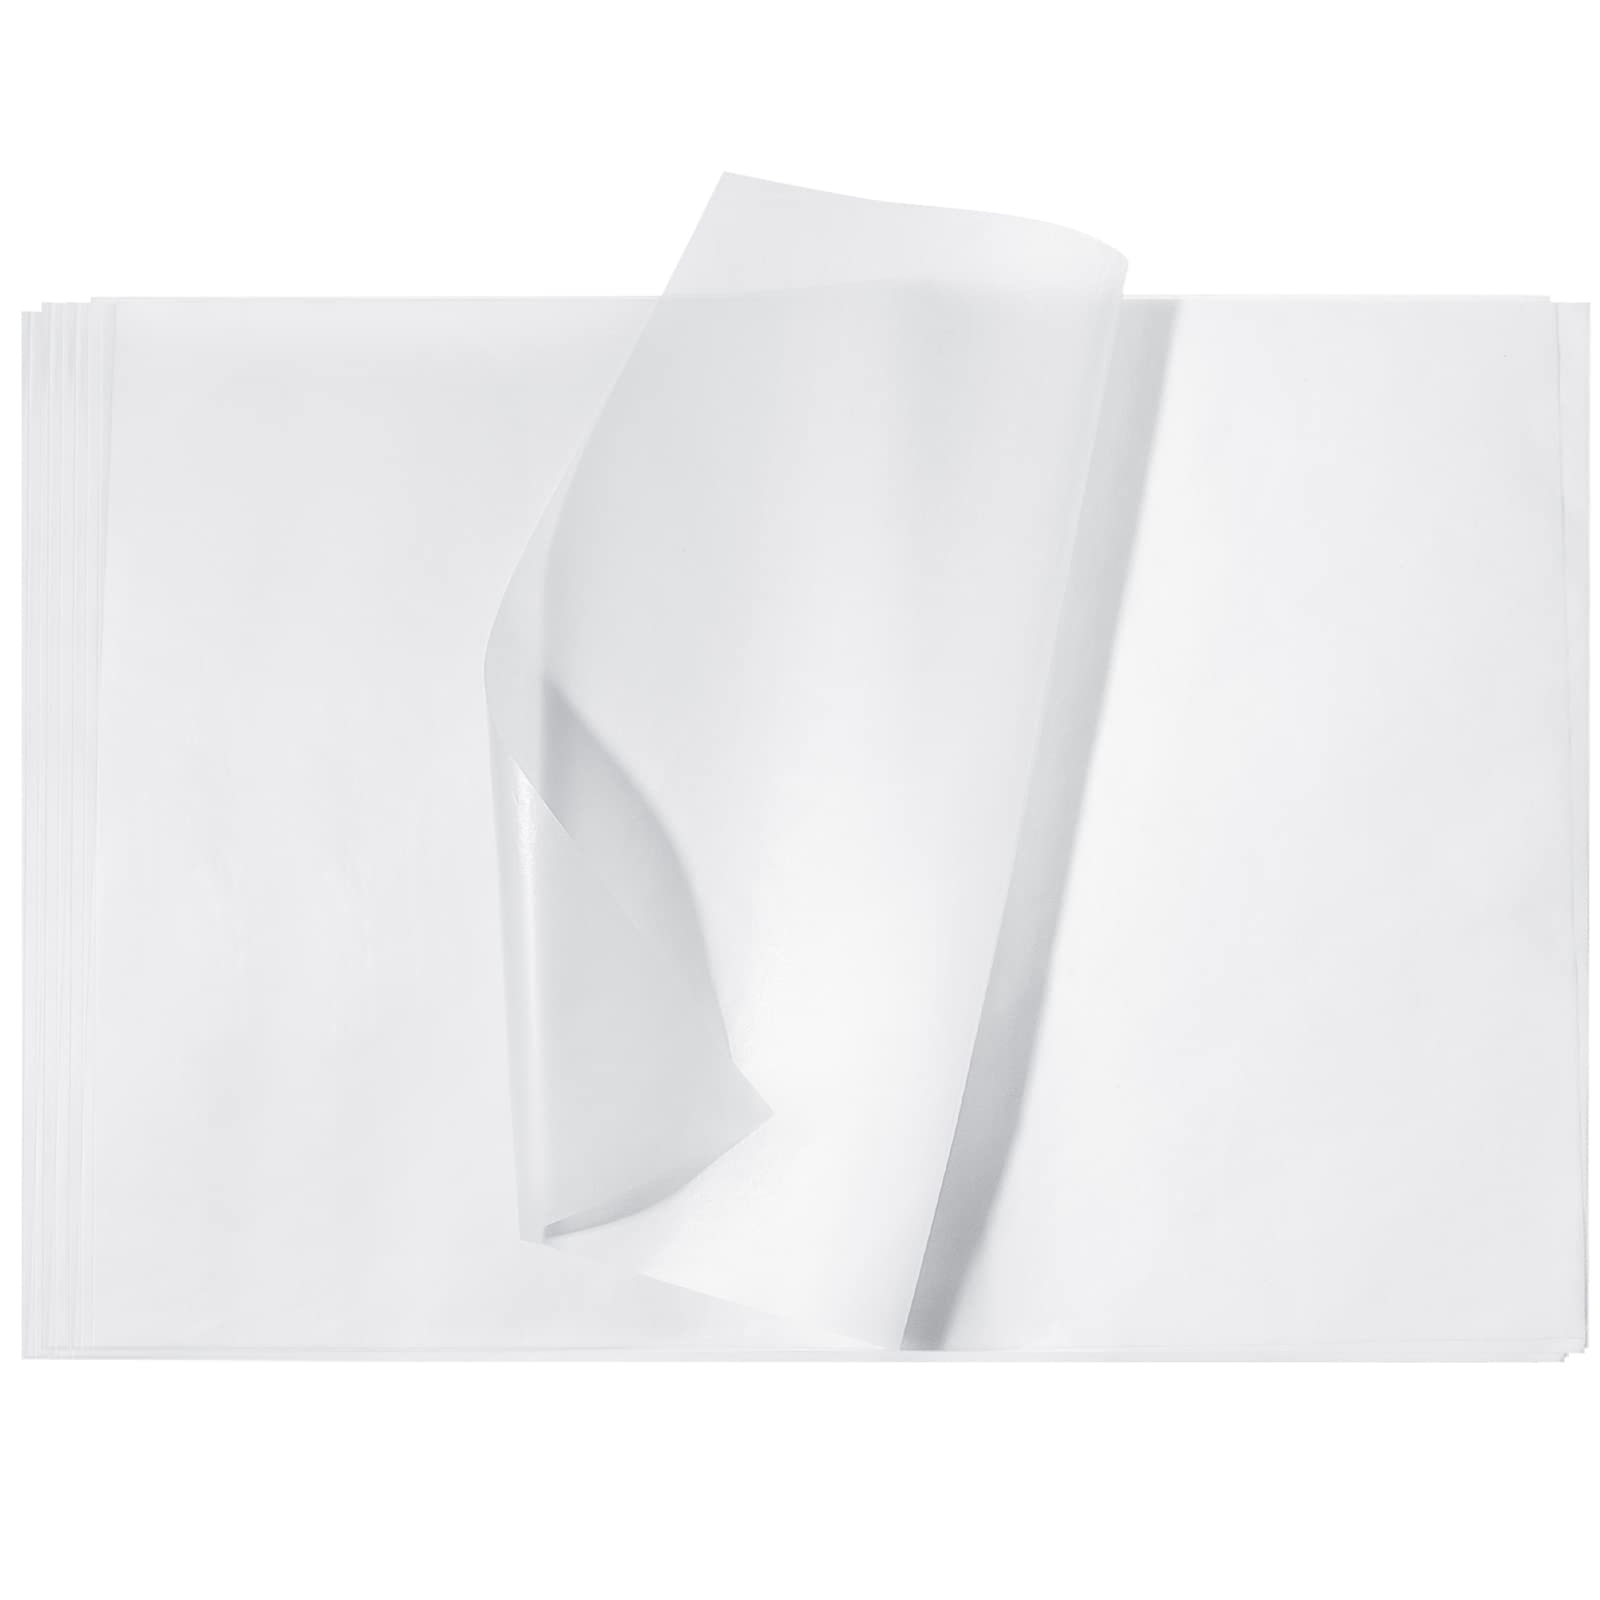 120 Sheets Deli Paper Sheets Transparent Paper Translucent Clear